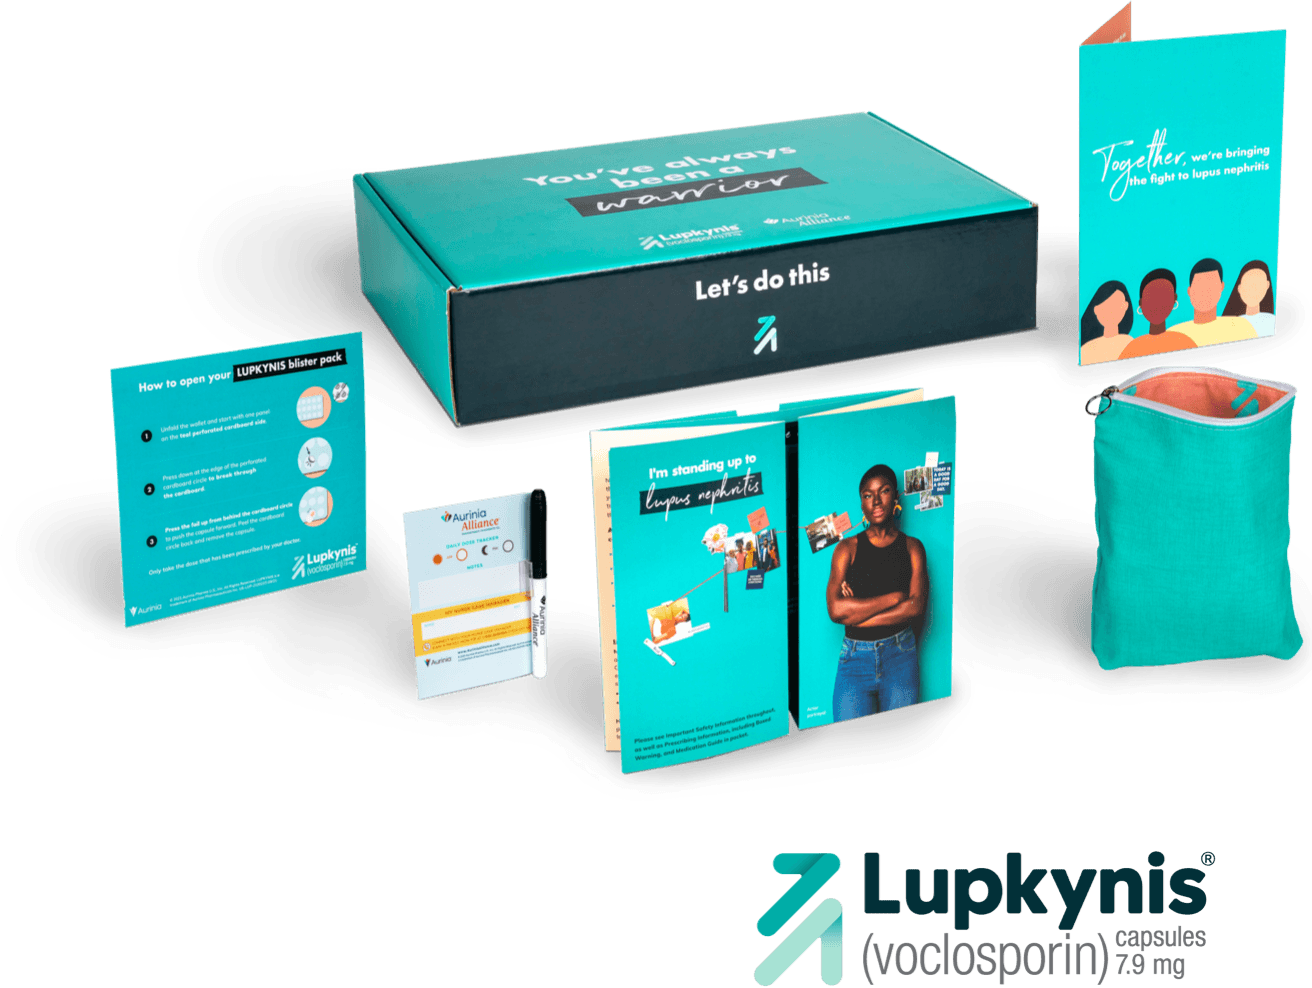 LUPKYNIS® (voclosporin) Welcome Kit